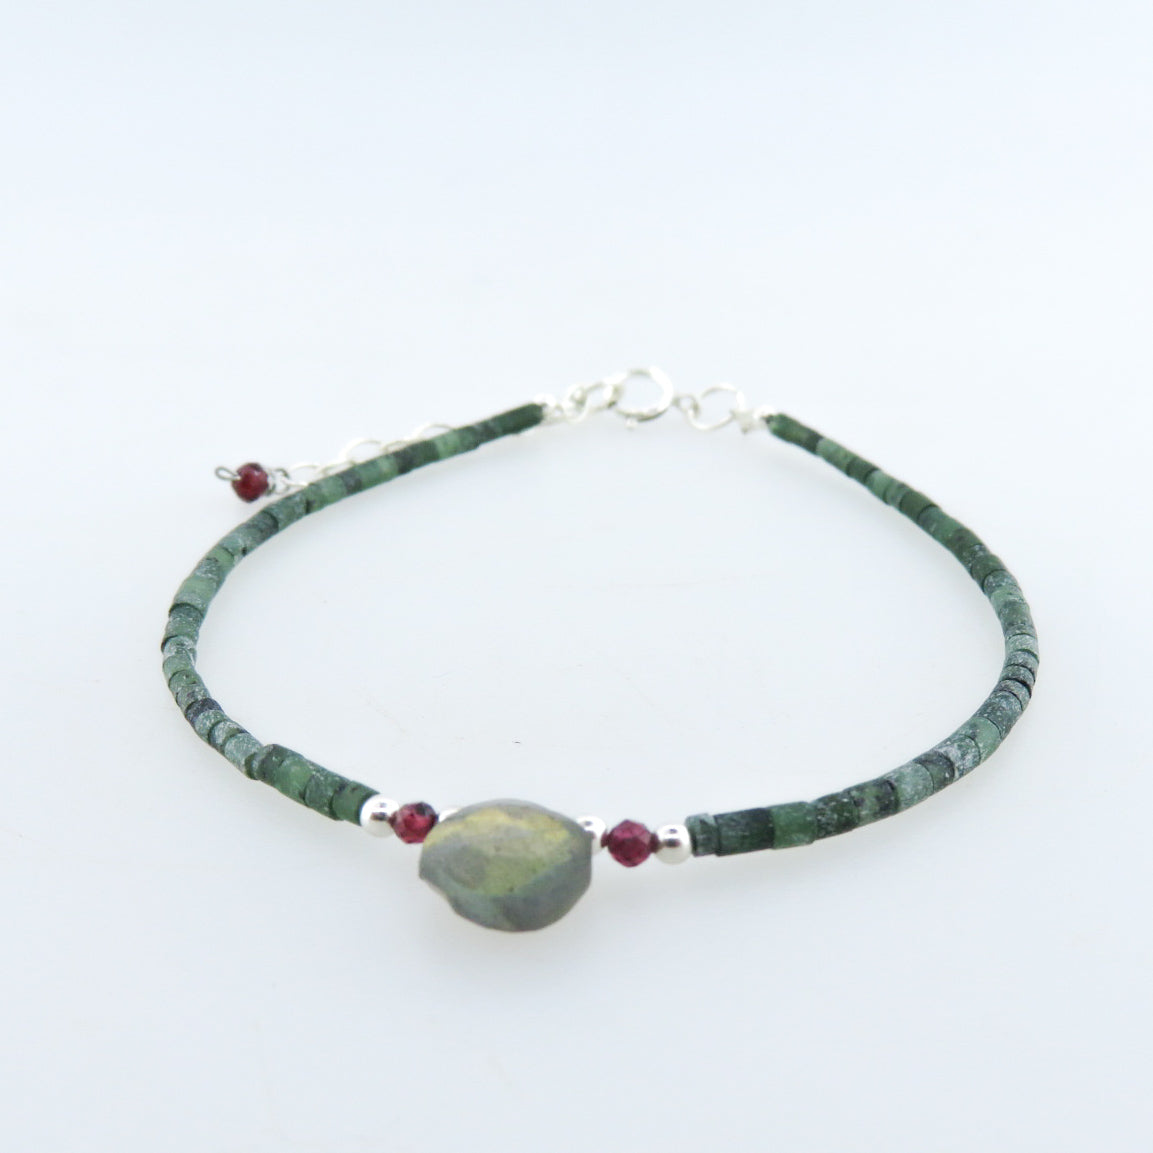 Jade Bracelet with Labradorite, Garnet and Silver Beads